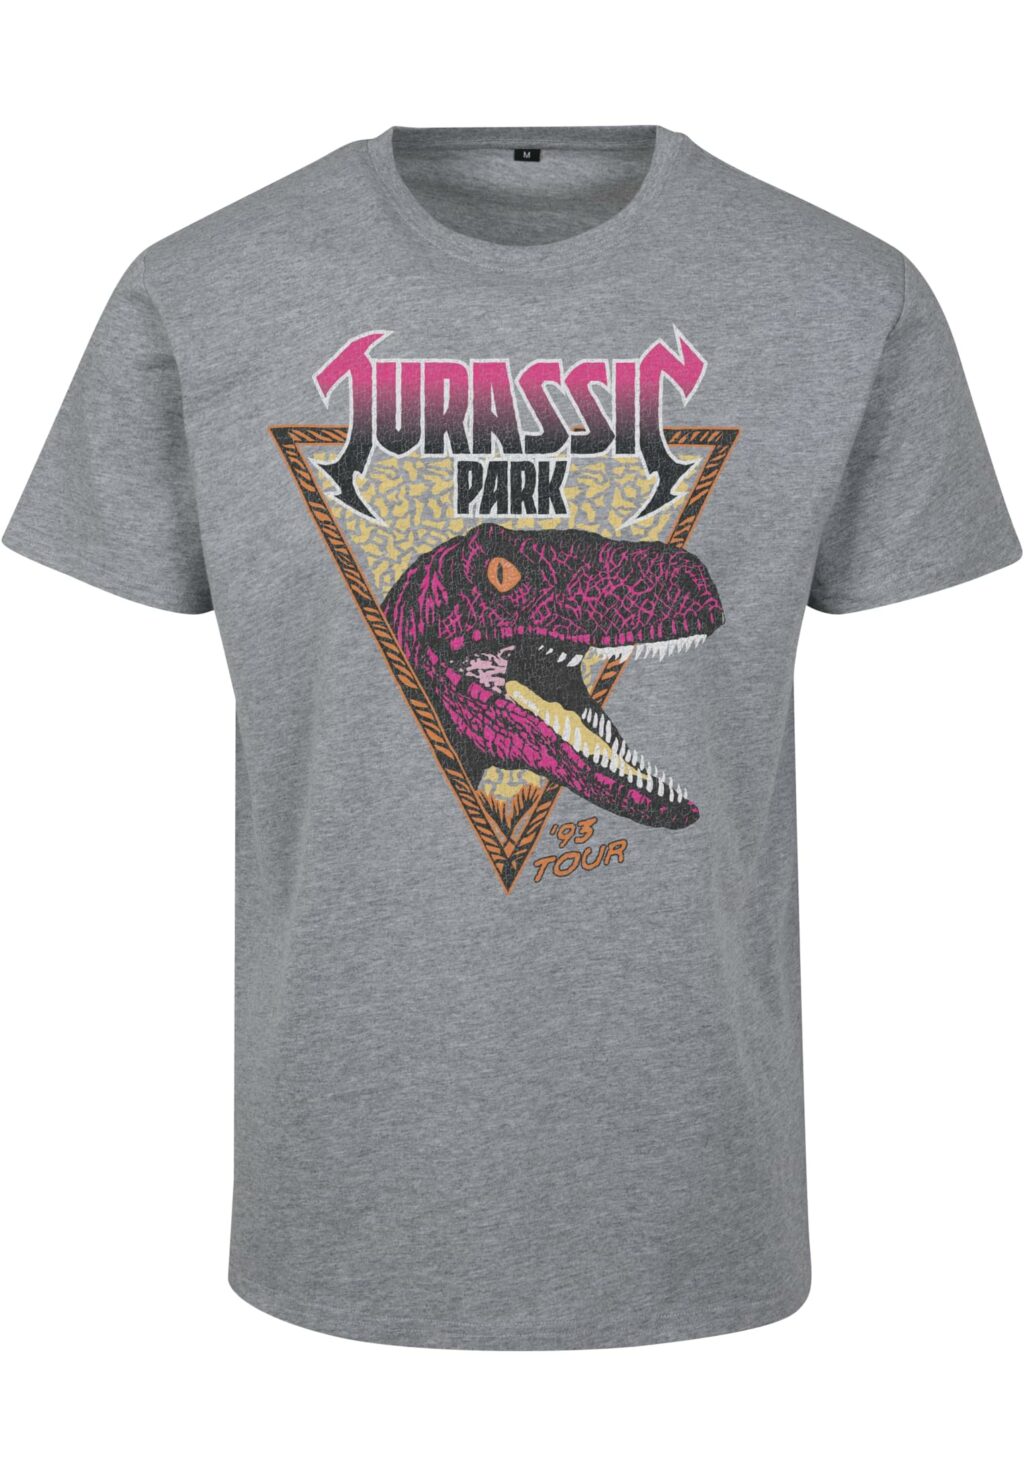 Jurassic Park Pink Rock Tee heather grey MC836